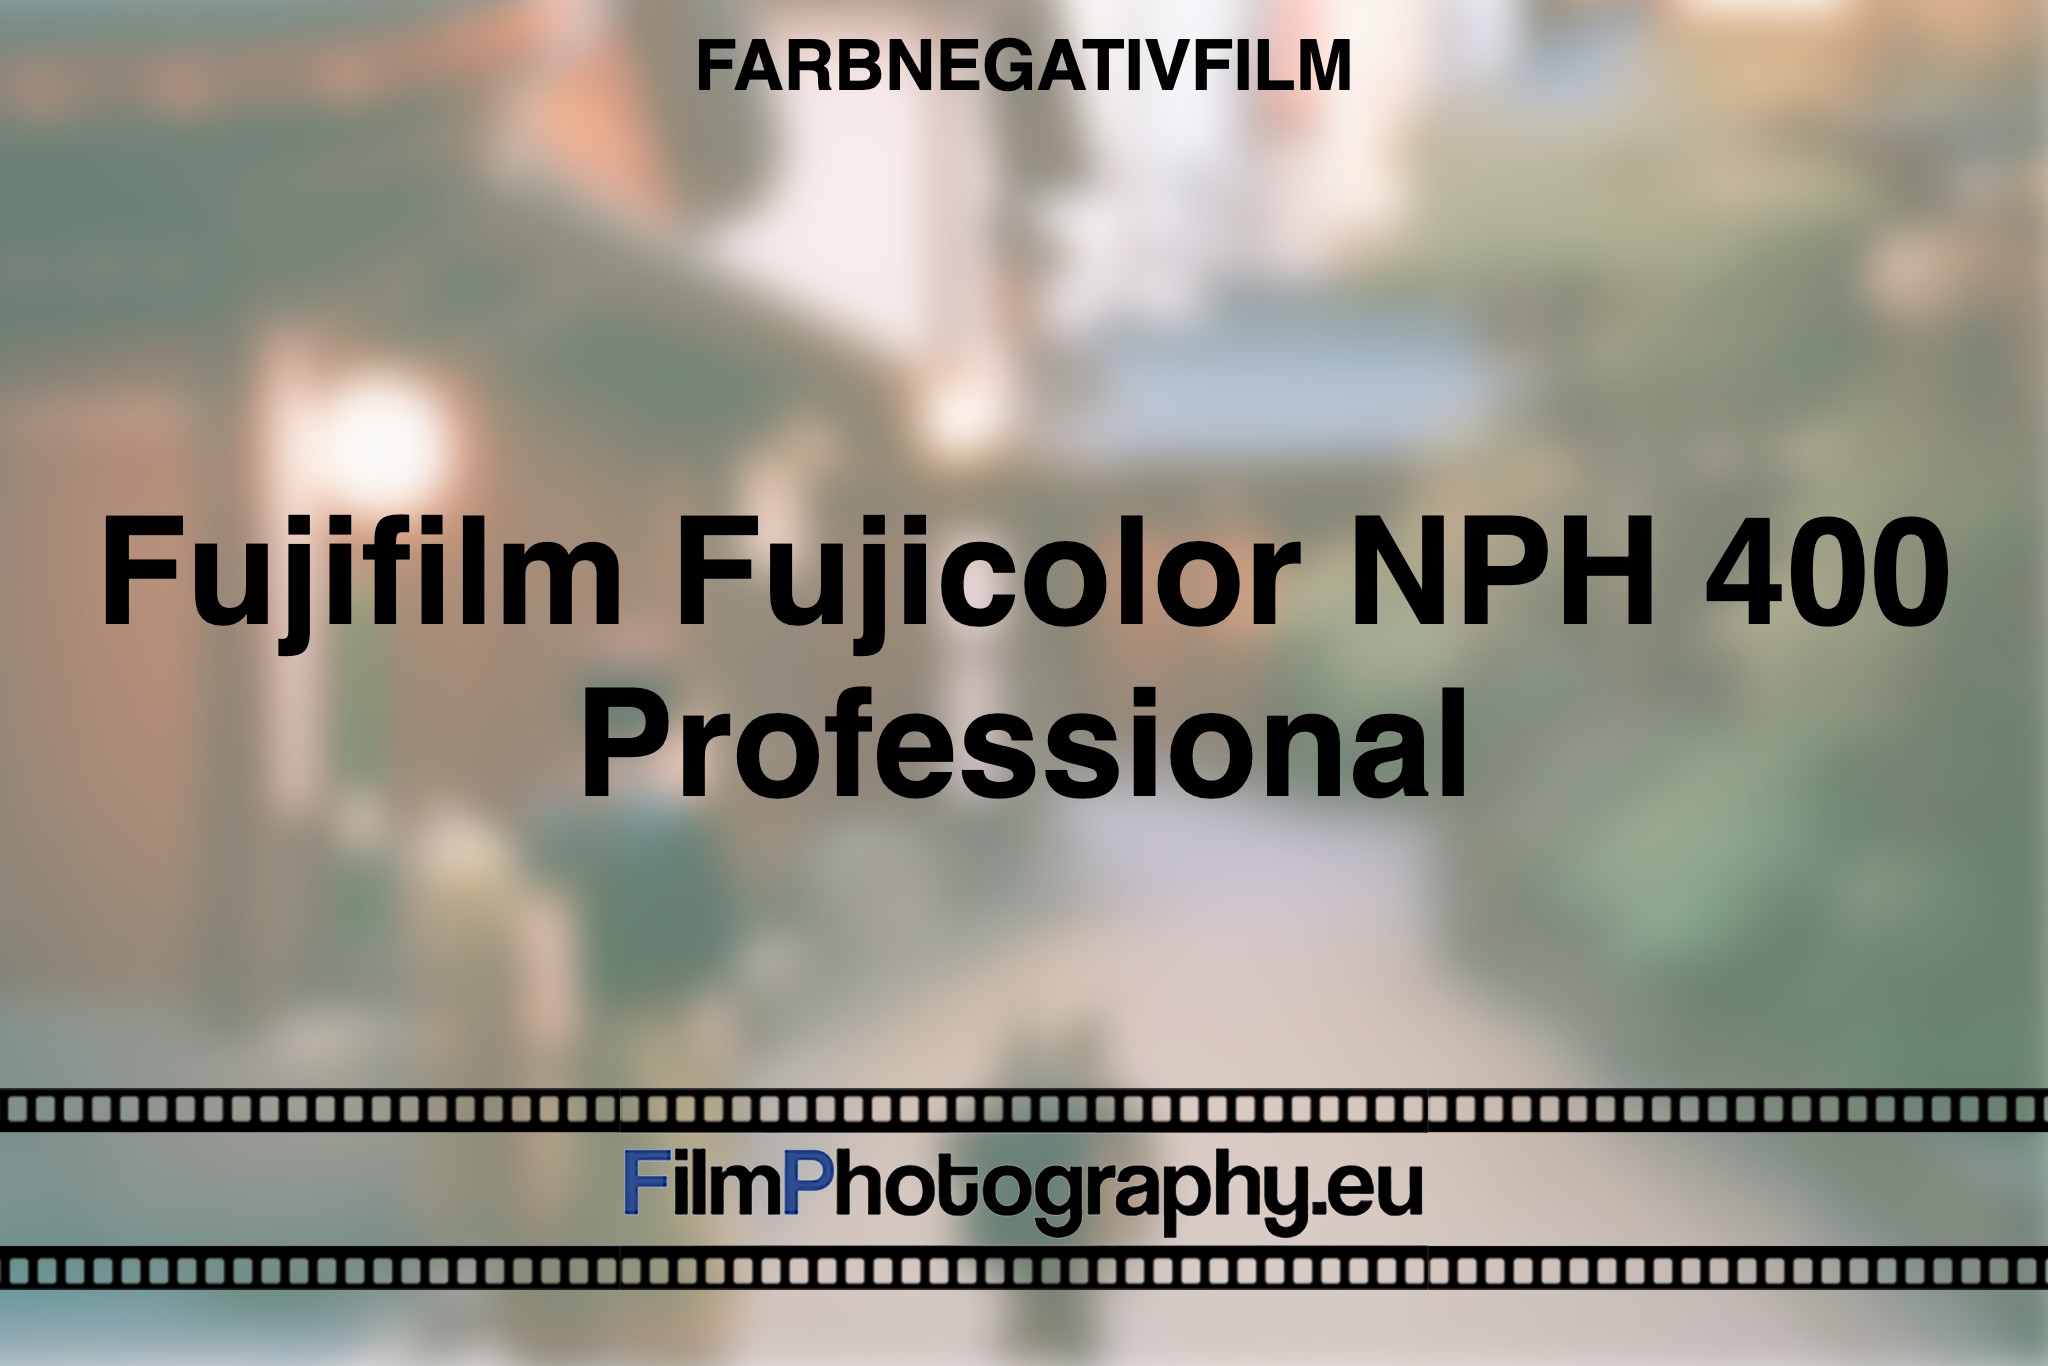 fujifilm-fujicolor-nph-400-professional-farbnegativfilm-bnv